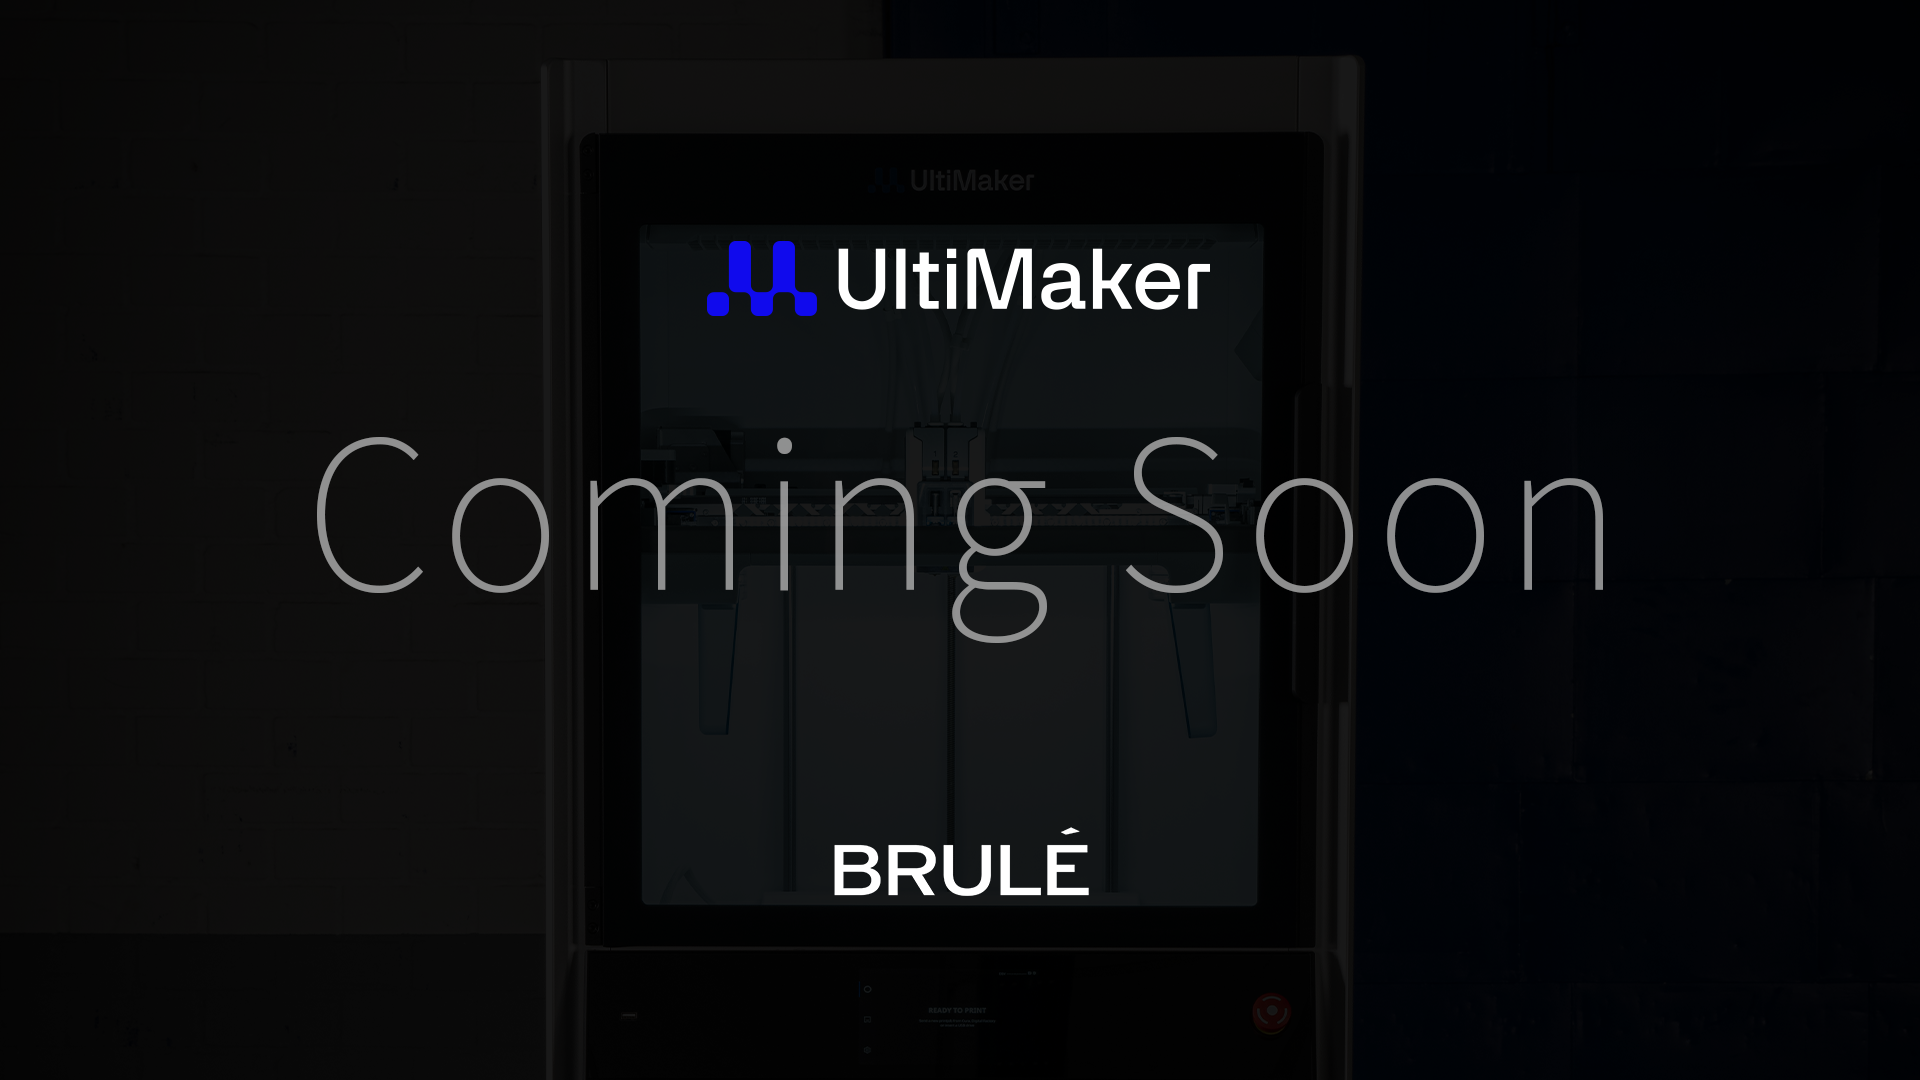 UltiMaker×Brule 新商品発表会のご案内